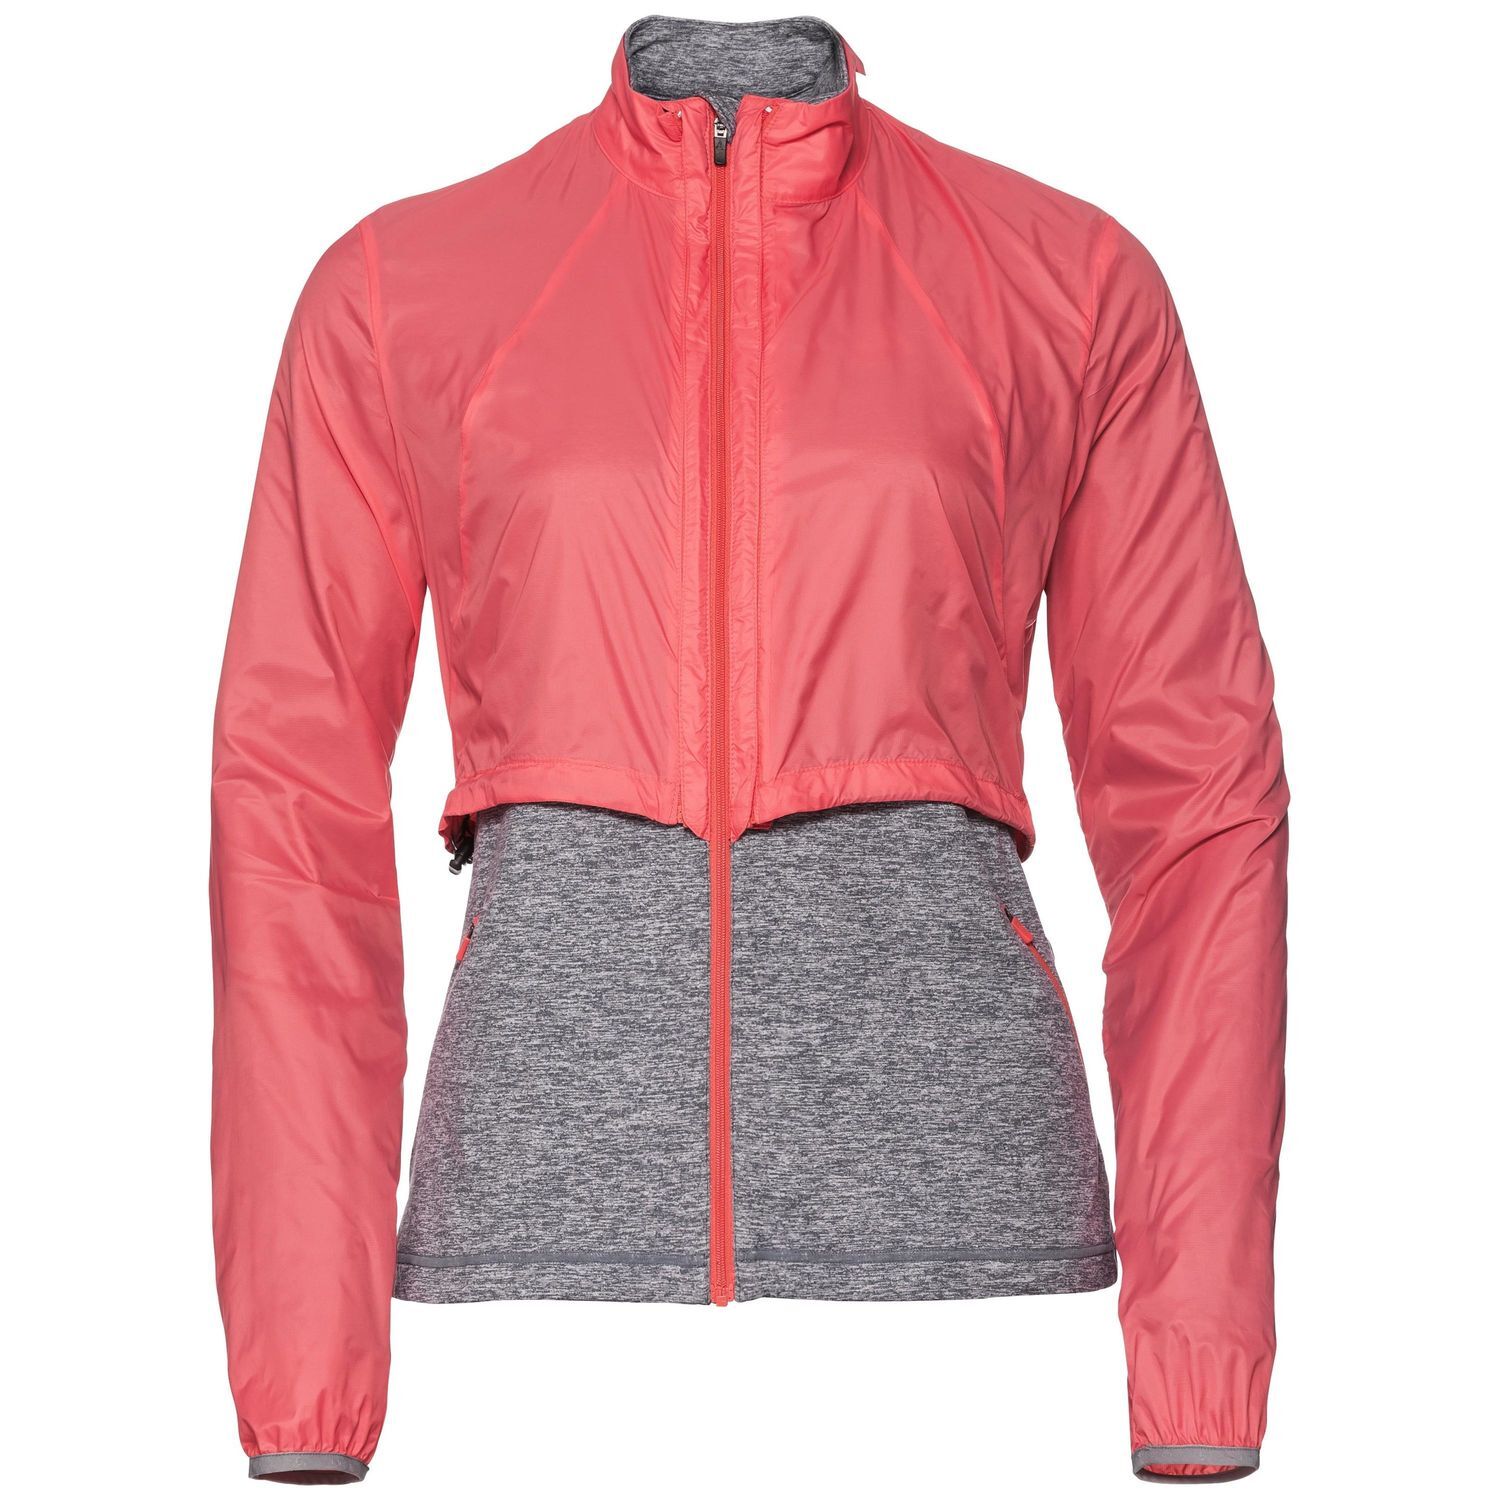 Odlo - Midlayer Full Zip Kumano Active Convert - Insulated jacket - Women's